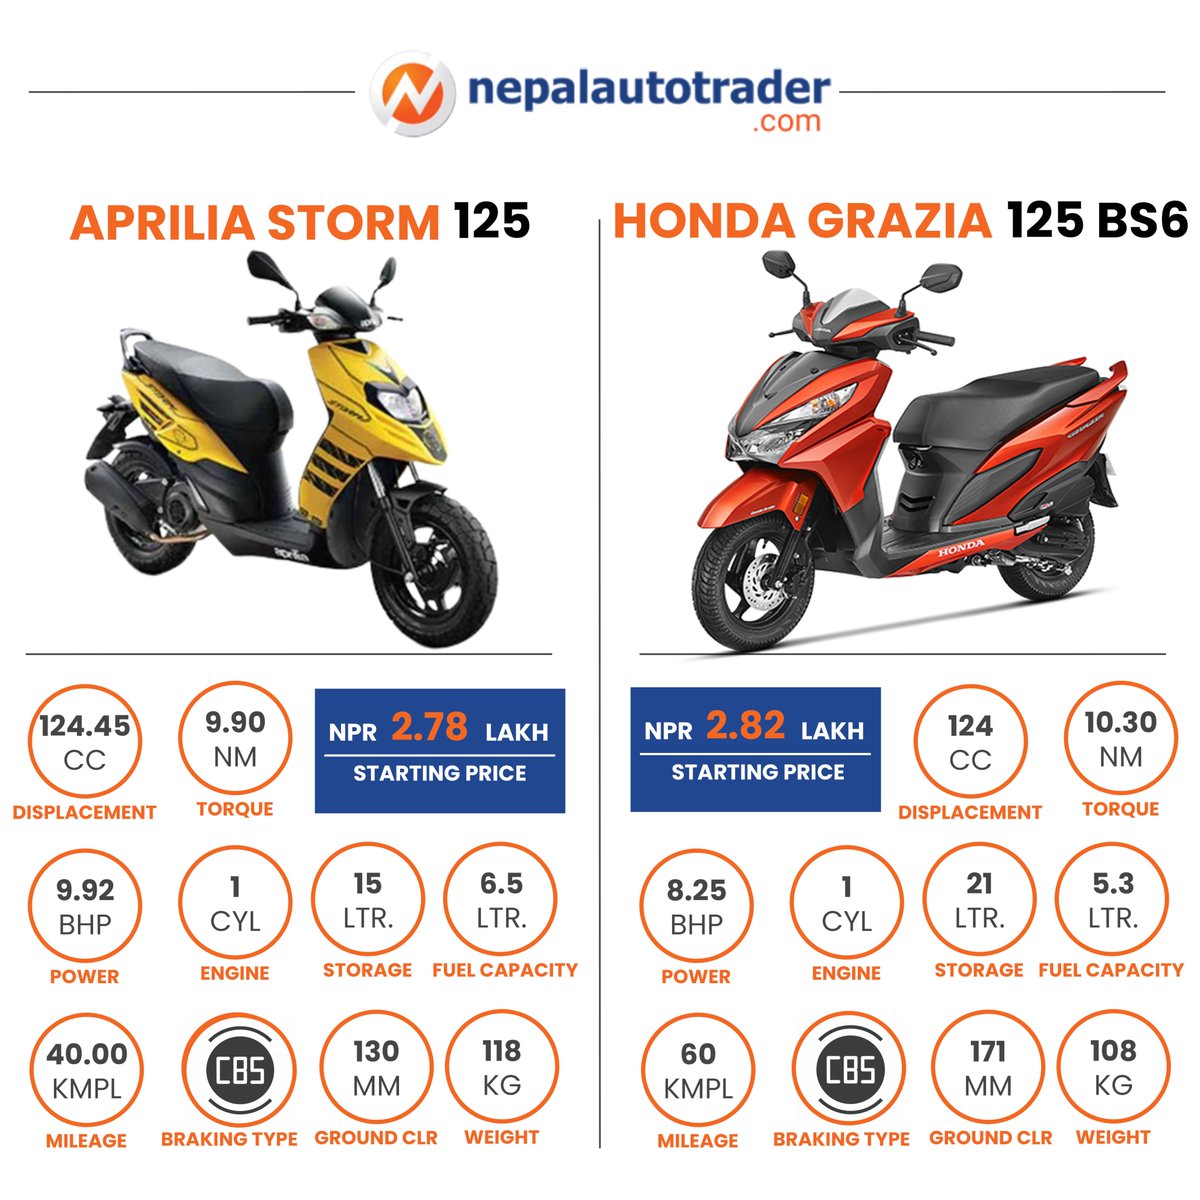 Here is a quick comparison between Aprilia Storm 125 and Honda Grazia 125. #Autonews #AutonewsNepal #Scooters #ScootersNepal #ApriliaScooters #ApriliaNepal #ApriliaStorm #ApriliaStorm125 #HondaScooters #HondaNepal #HondaGrazia #HondaGrazia125BS6 #Nepalautotrader